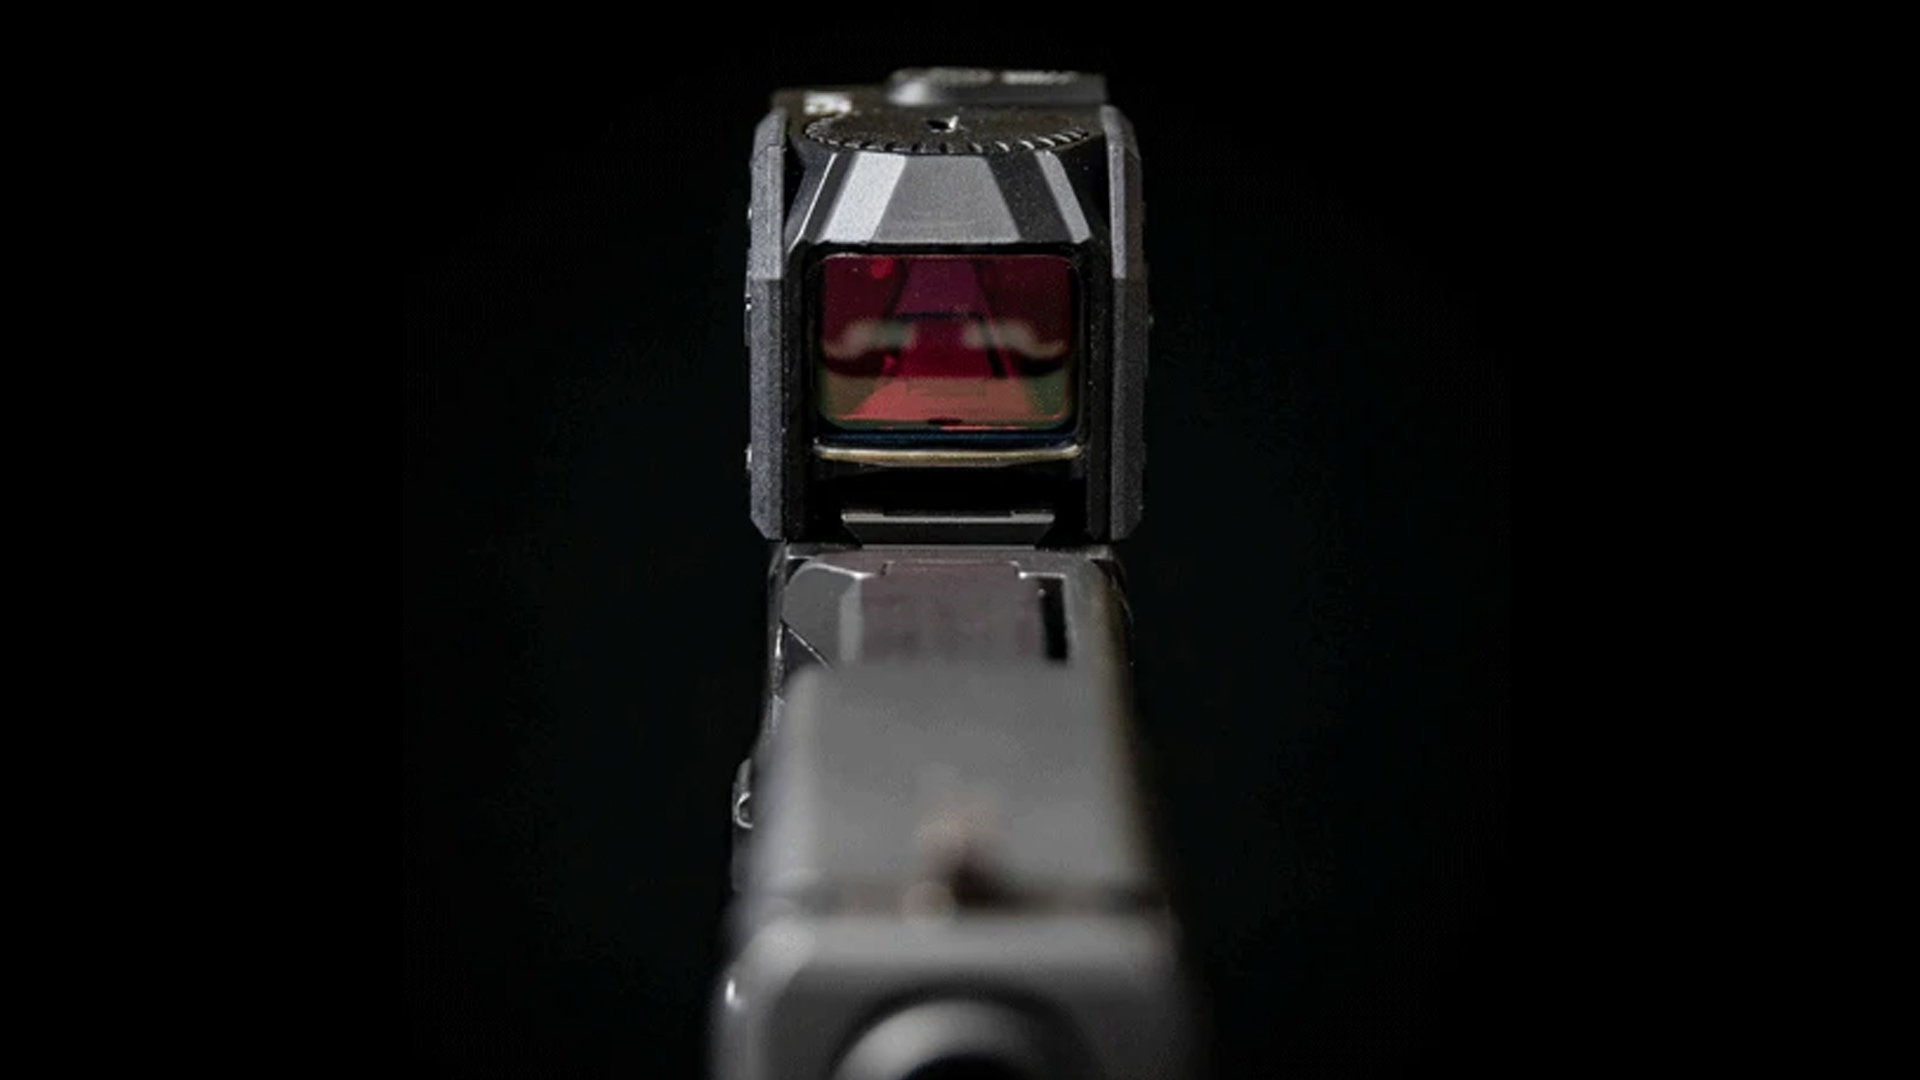 MPS sight on pistol